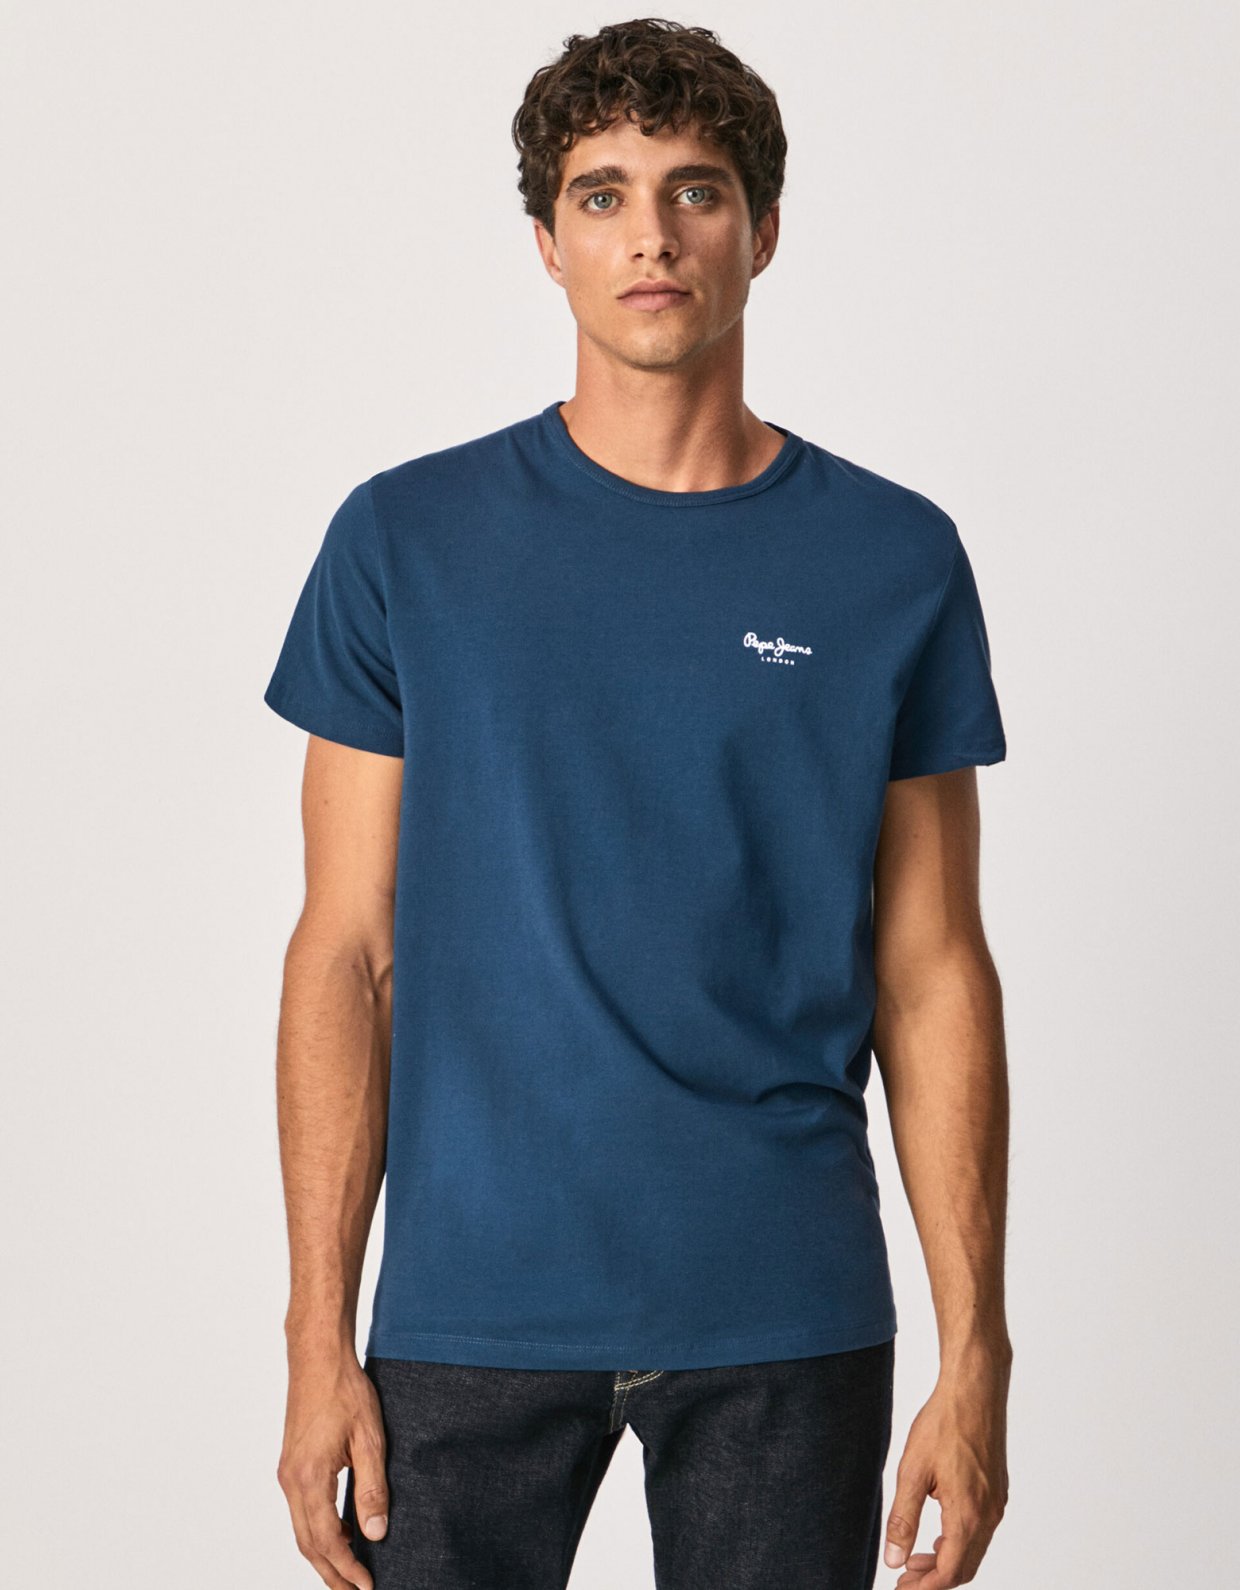 Pepe Jeans Original basic S/S t-shirt navy